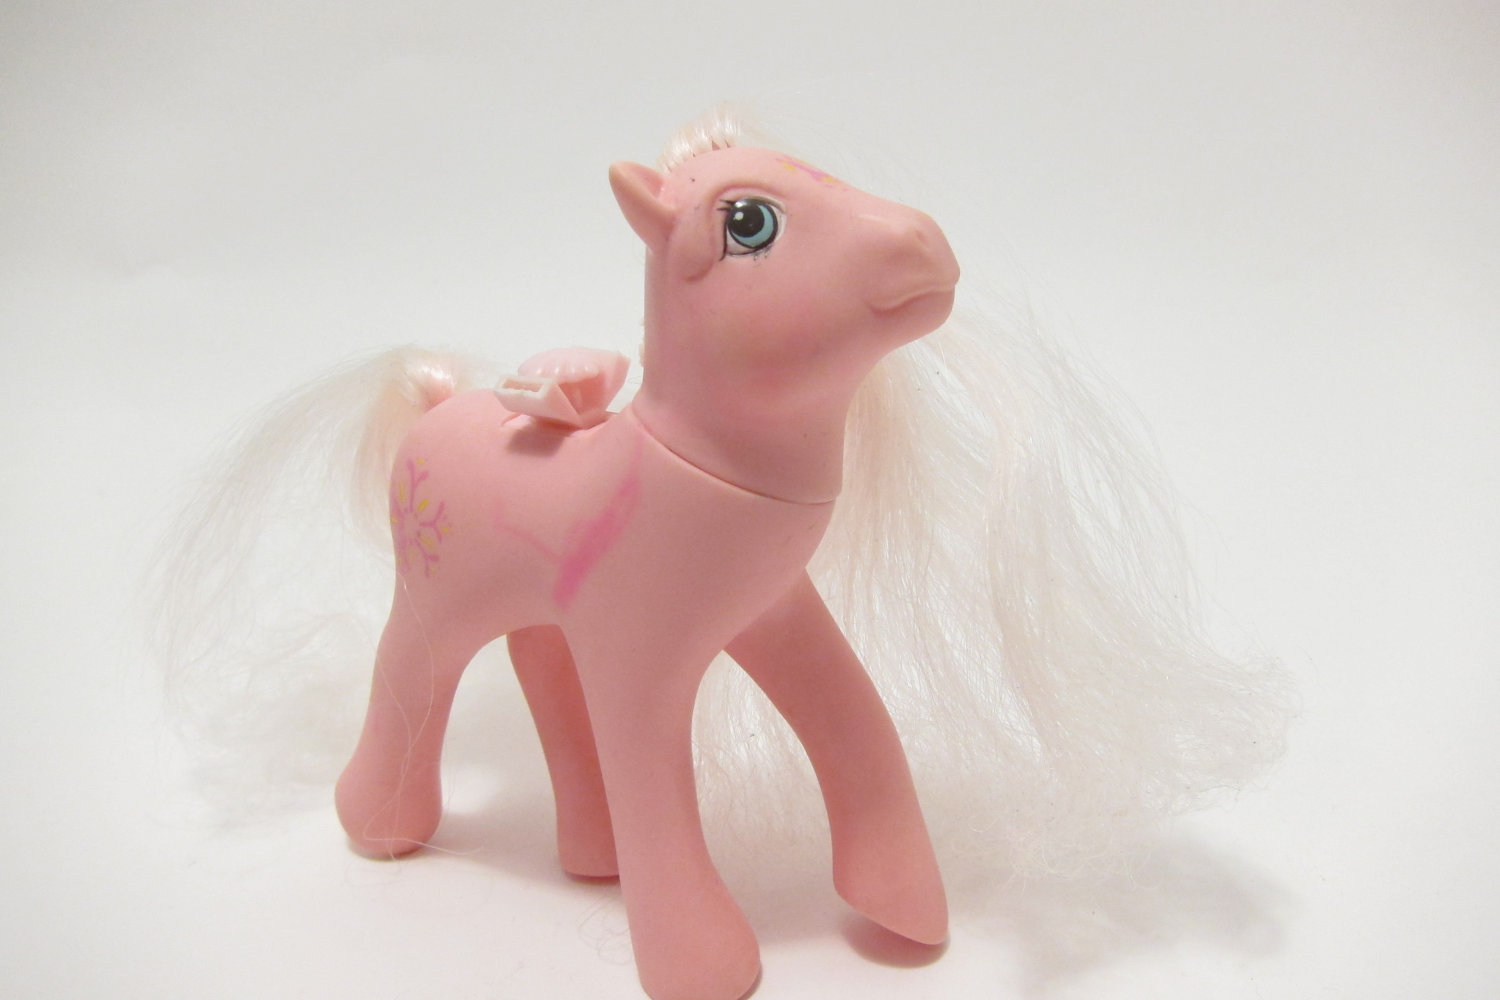 Pink Little Pony